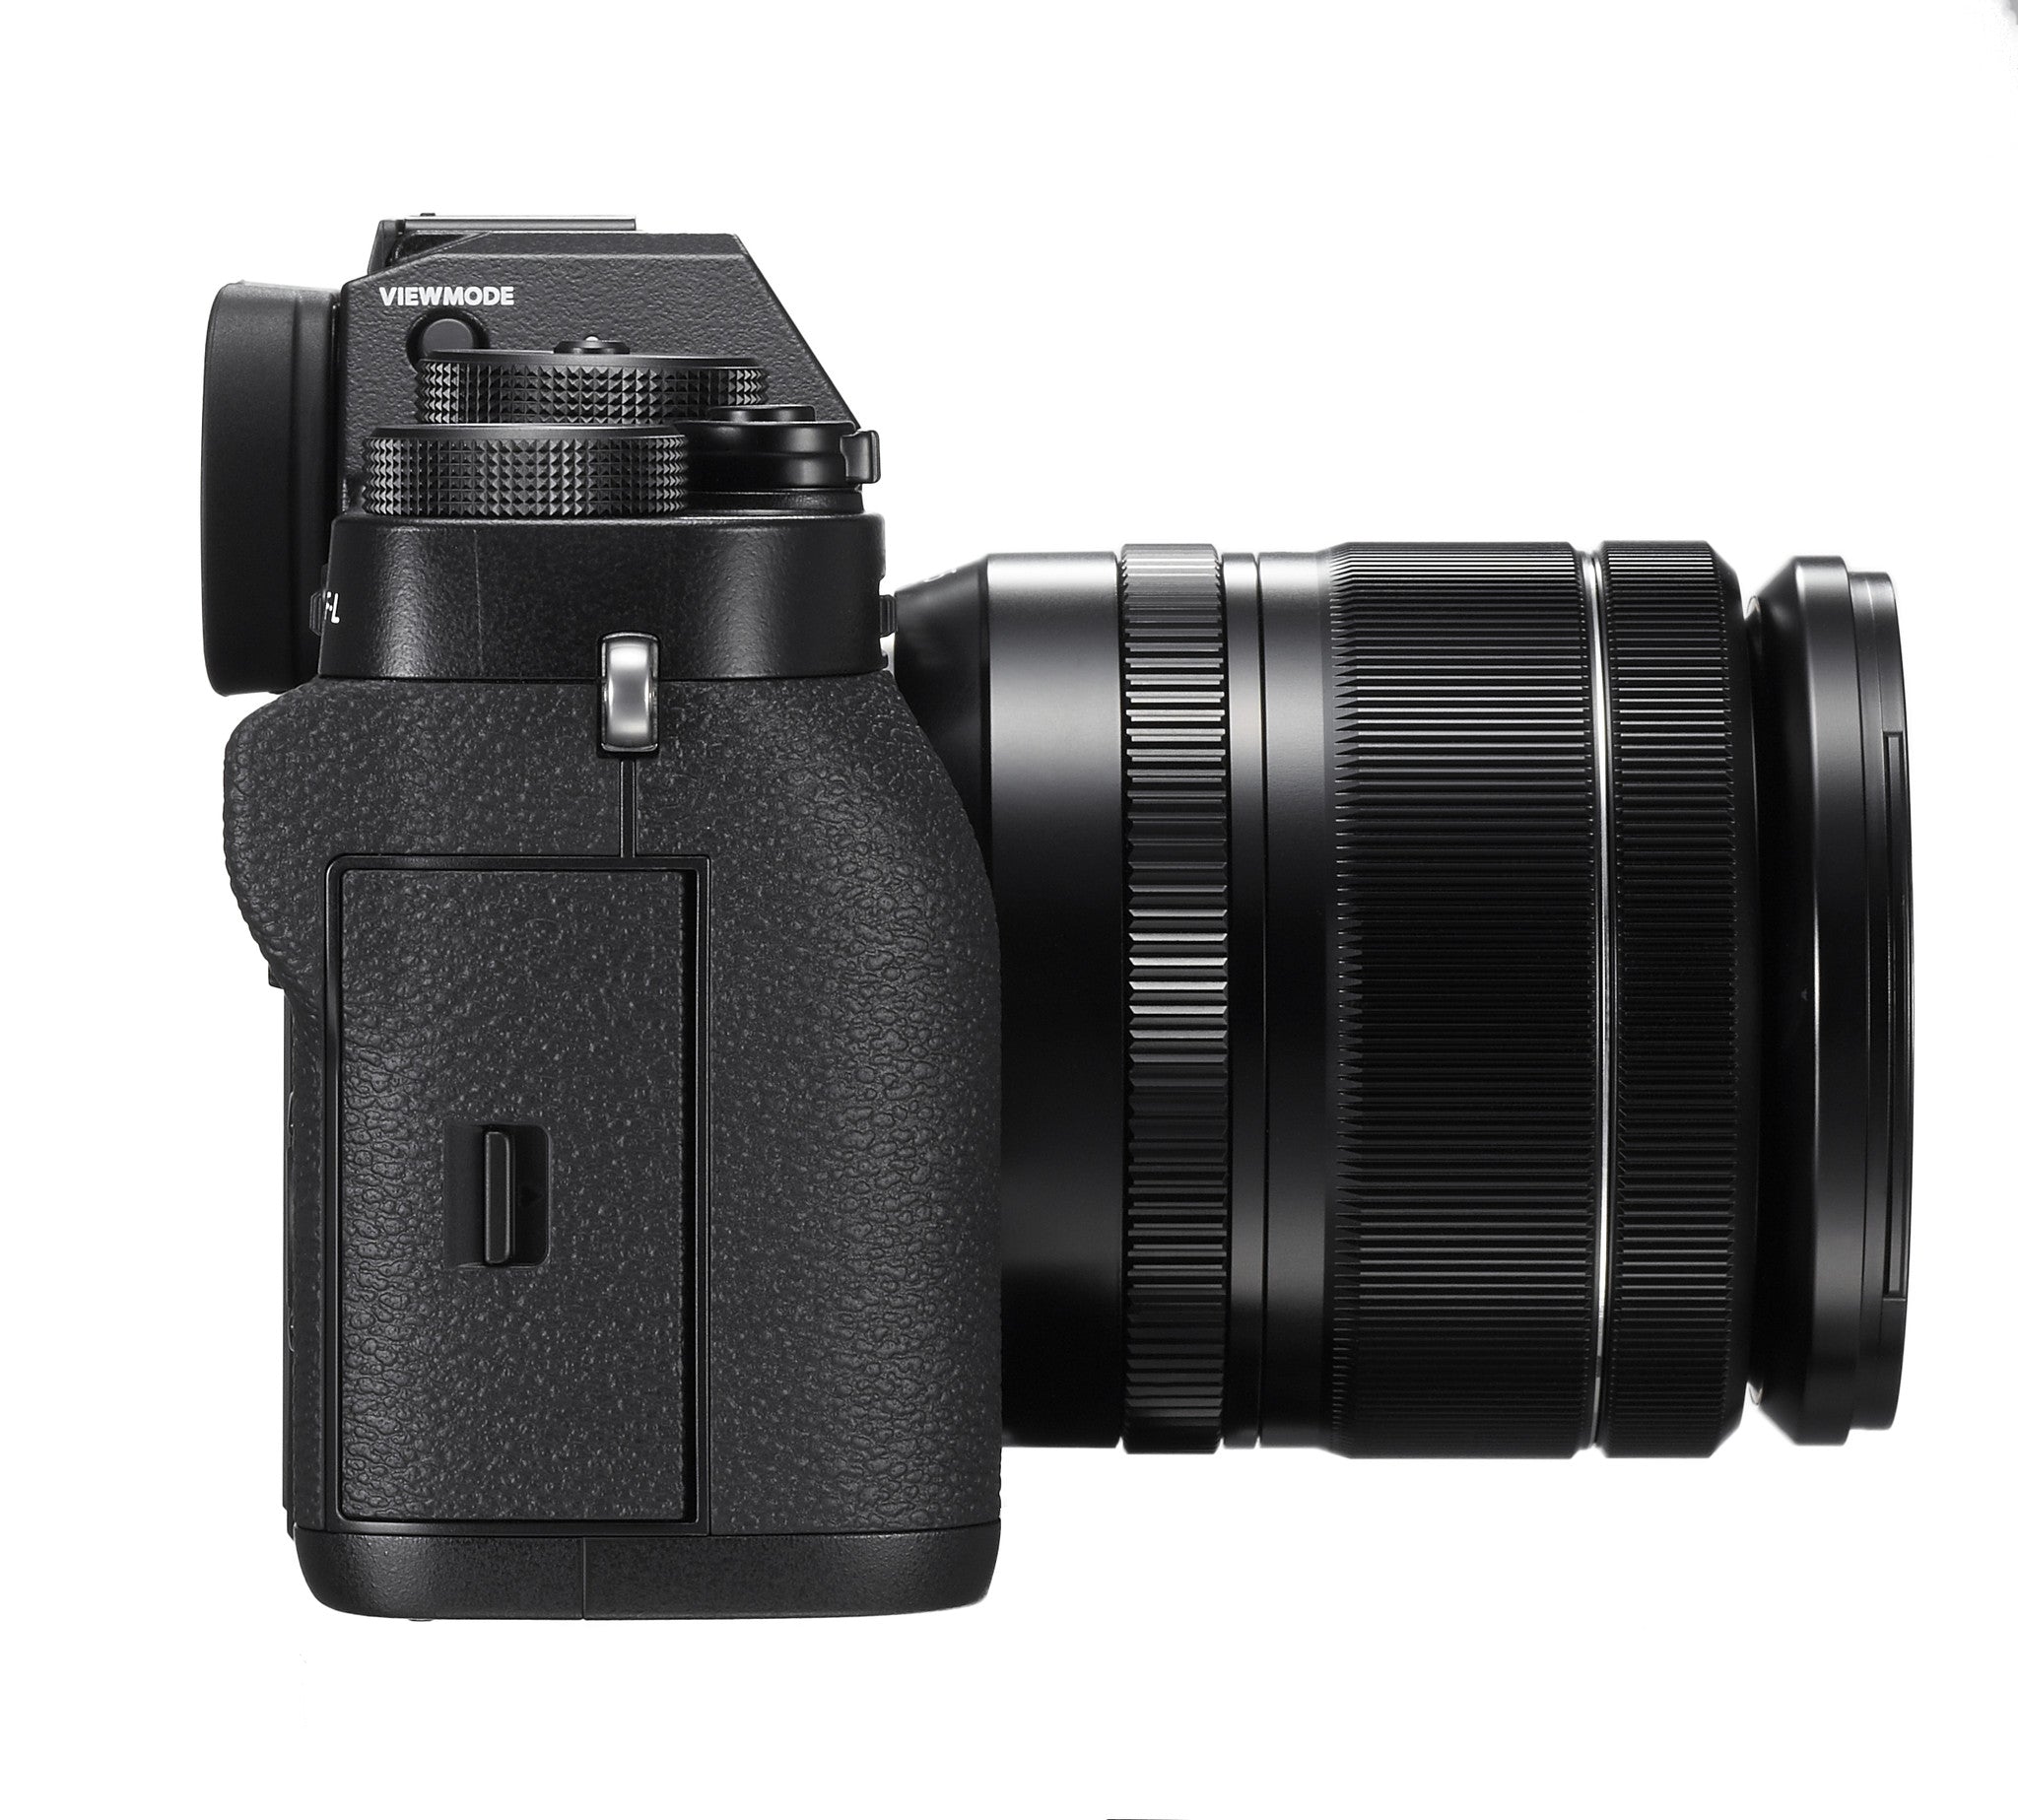 Fujifilm X-T2 Digital Camera w/ 18-55mm Lens Kit (Black), camera mirrorless cameras, Fujifilm - Pictureline  - 9